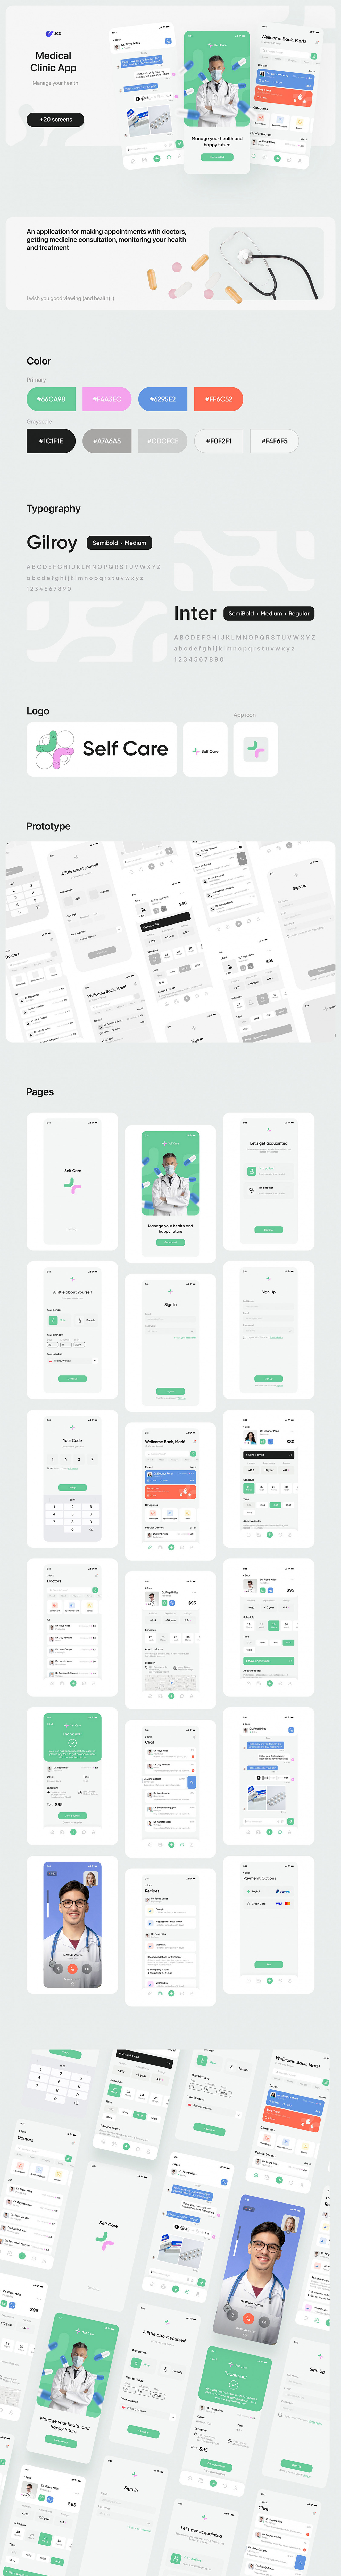 Self Care Medical App — Free UI Kit